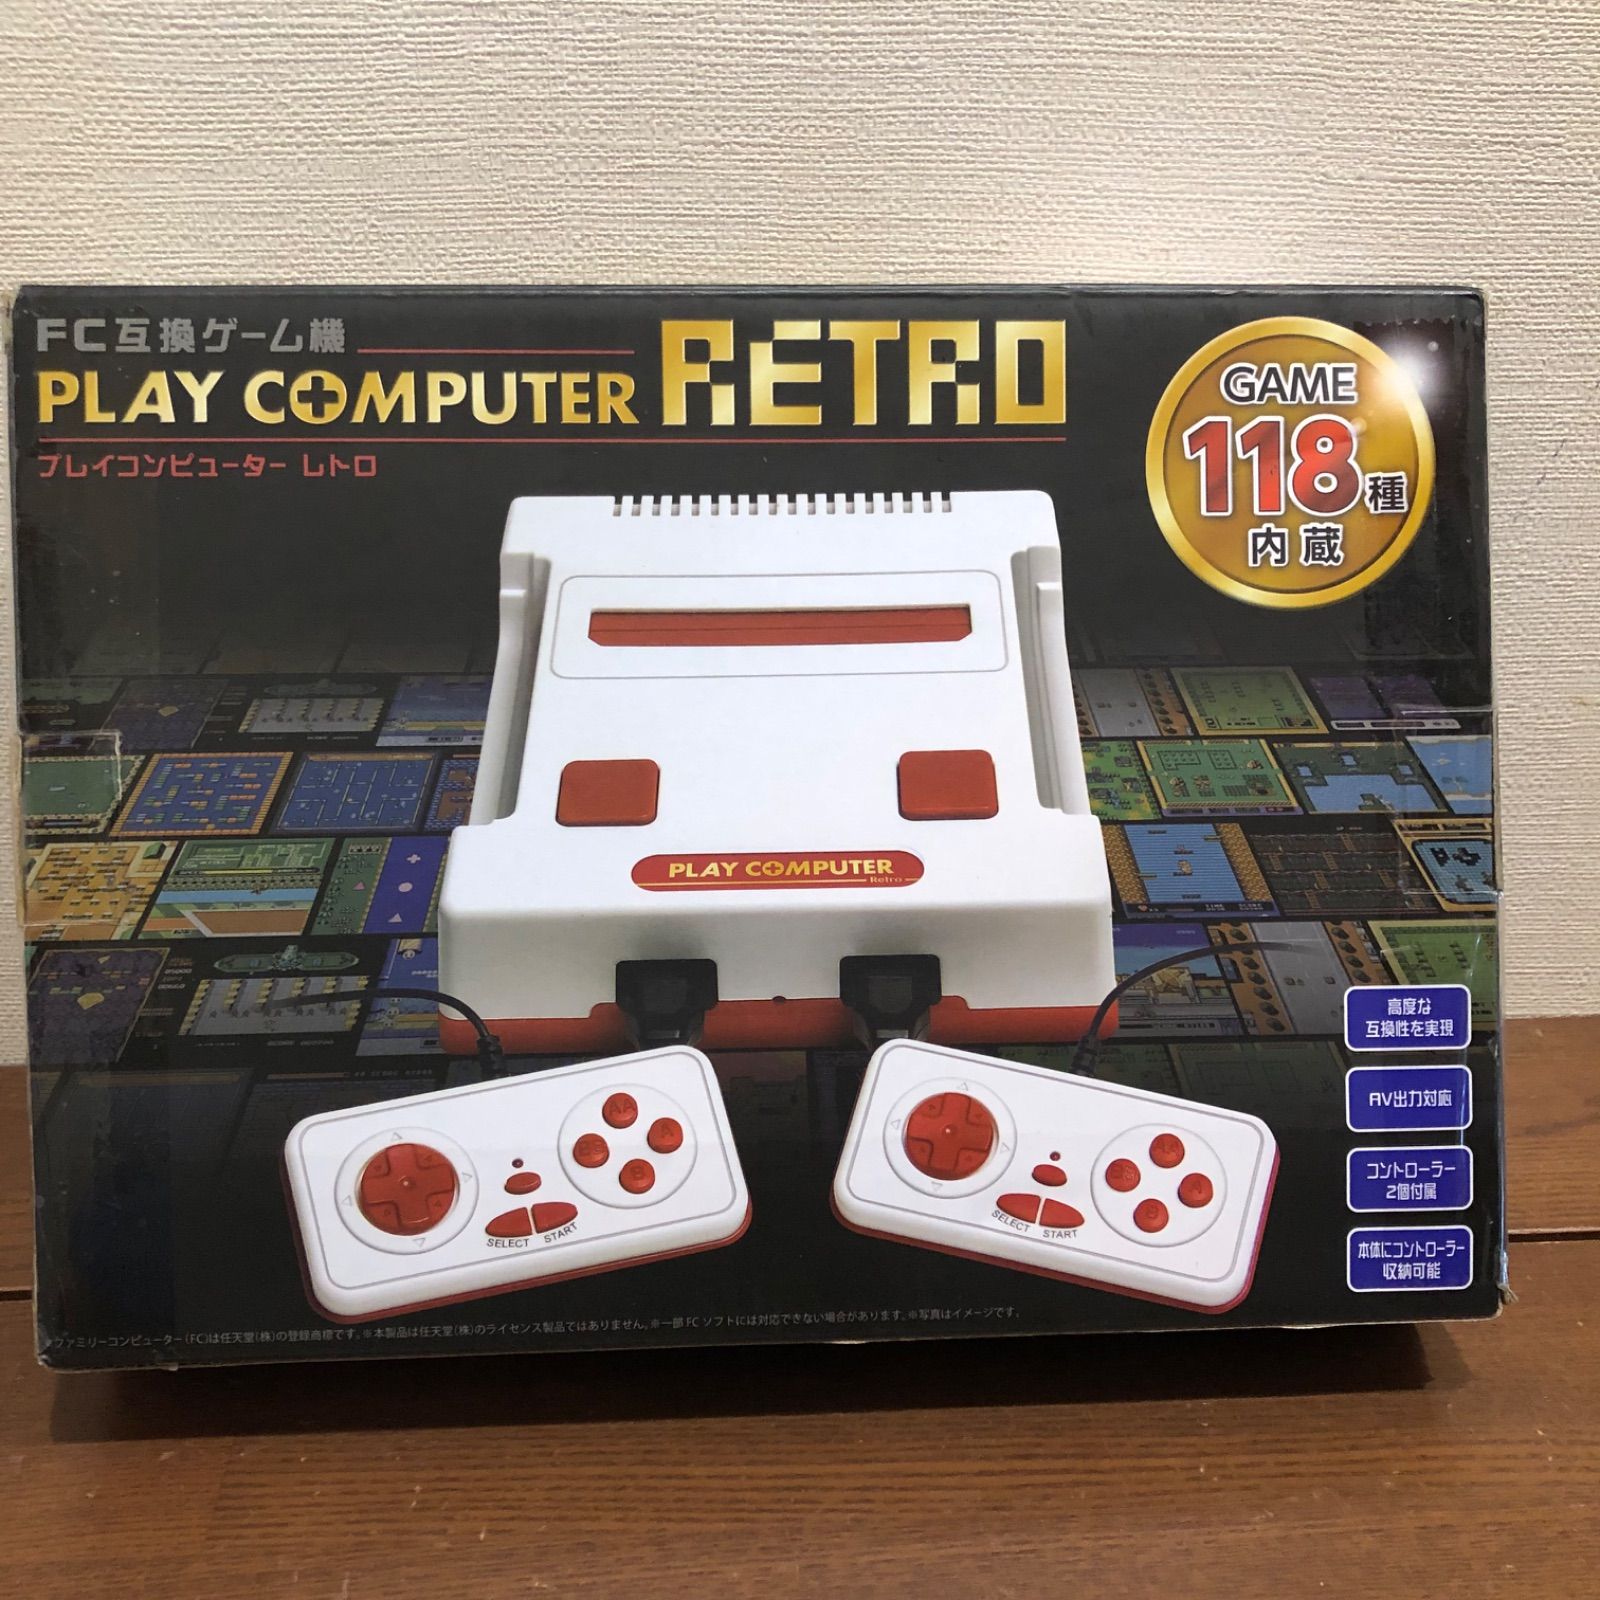 Play Computer RETRO プレイコンピュータ レトロ ゲーム118種内蔵 